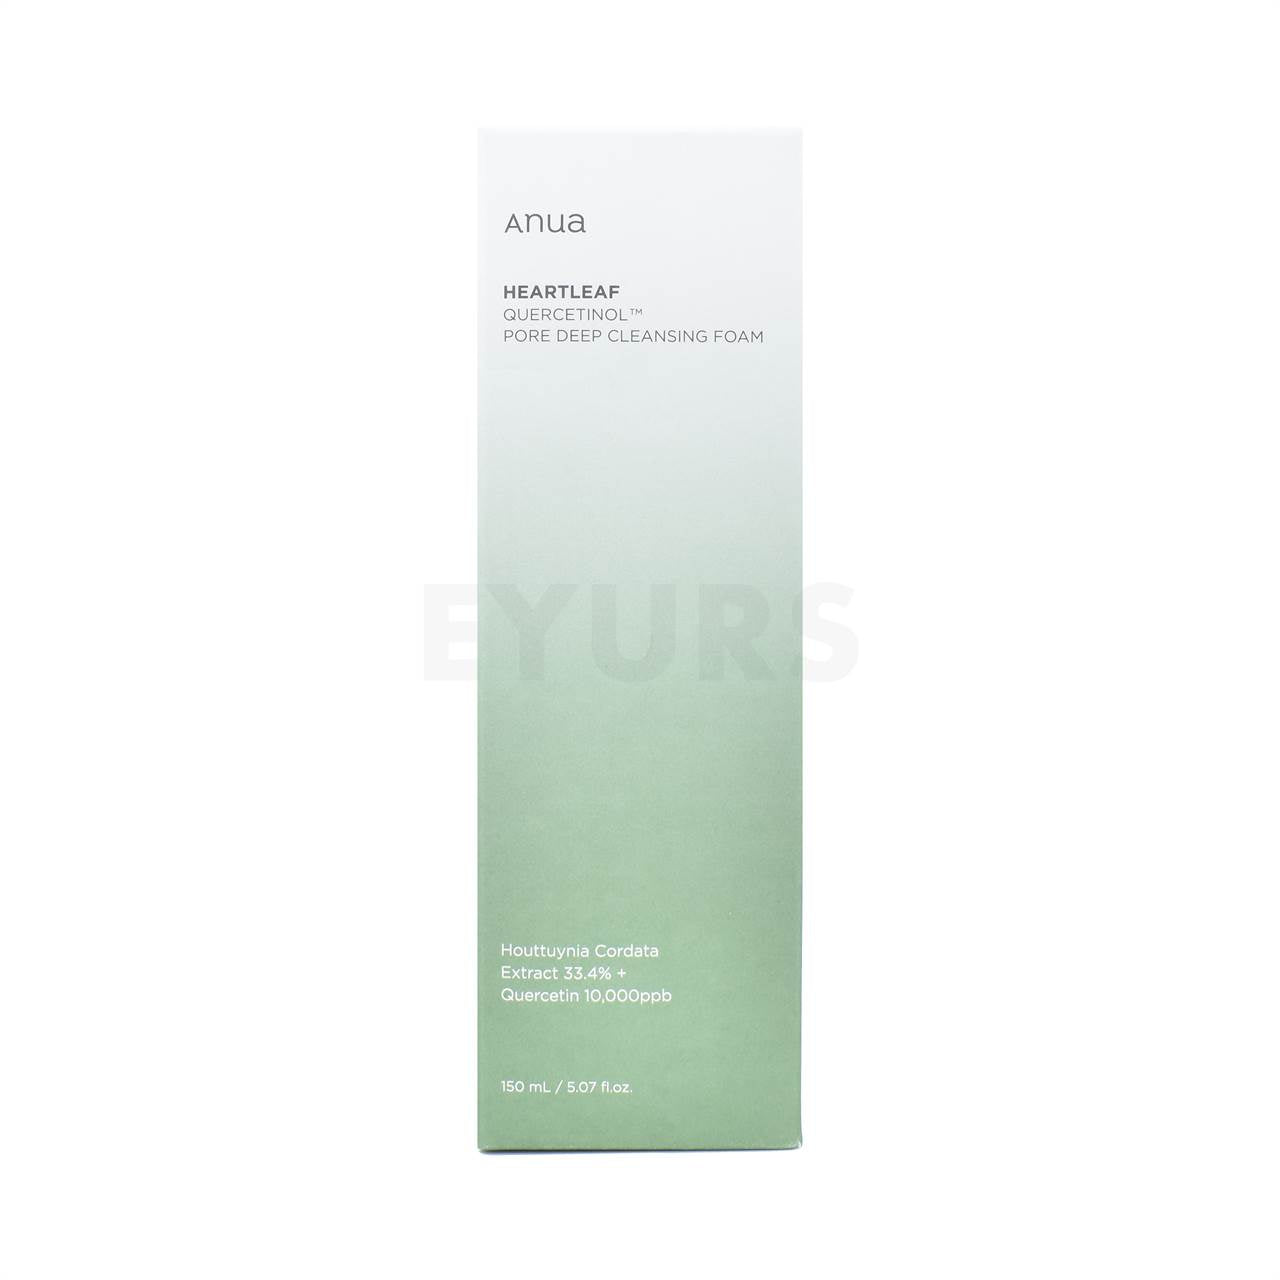 anua heartleaf quercetinol pore deep cleansing foam 150ml front side packaging